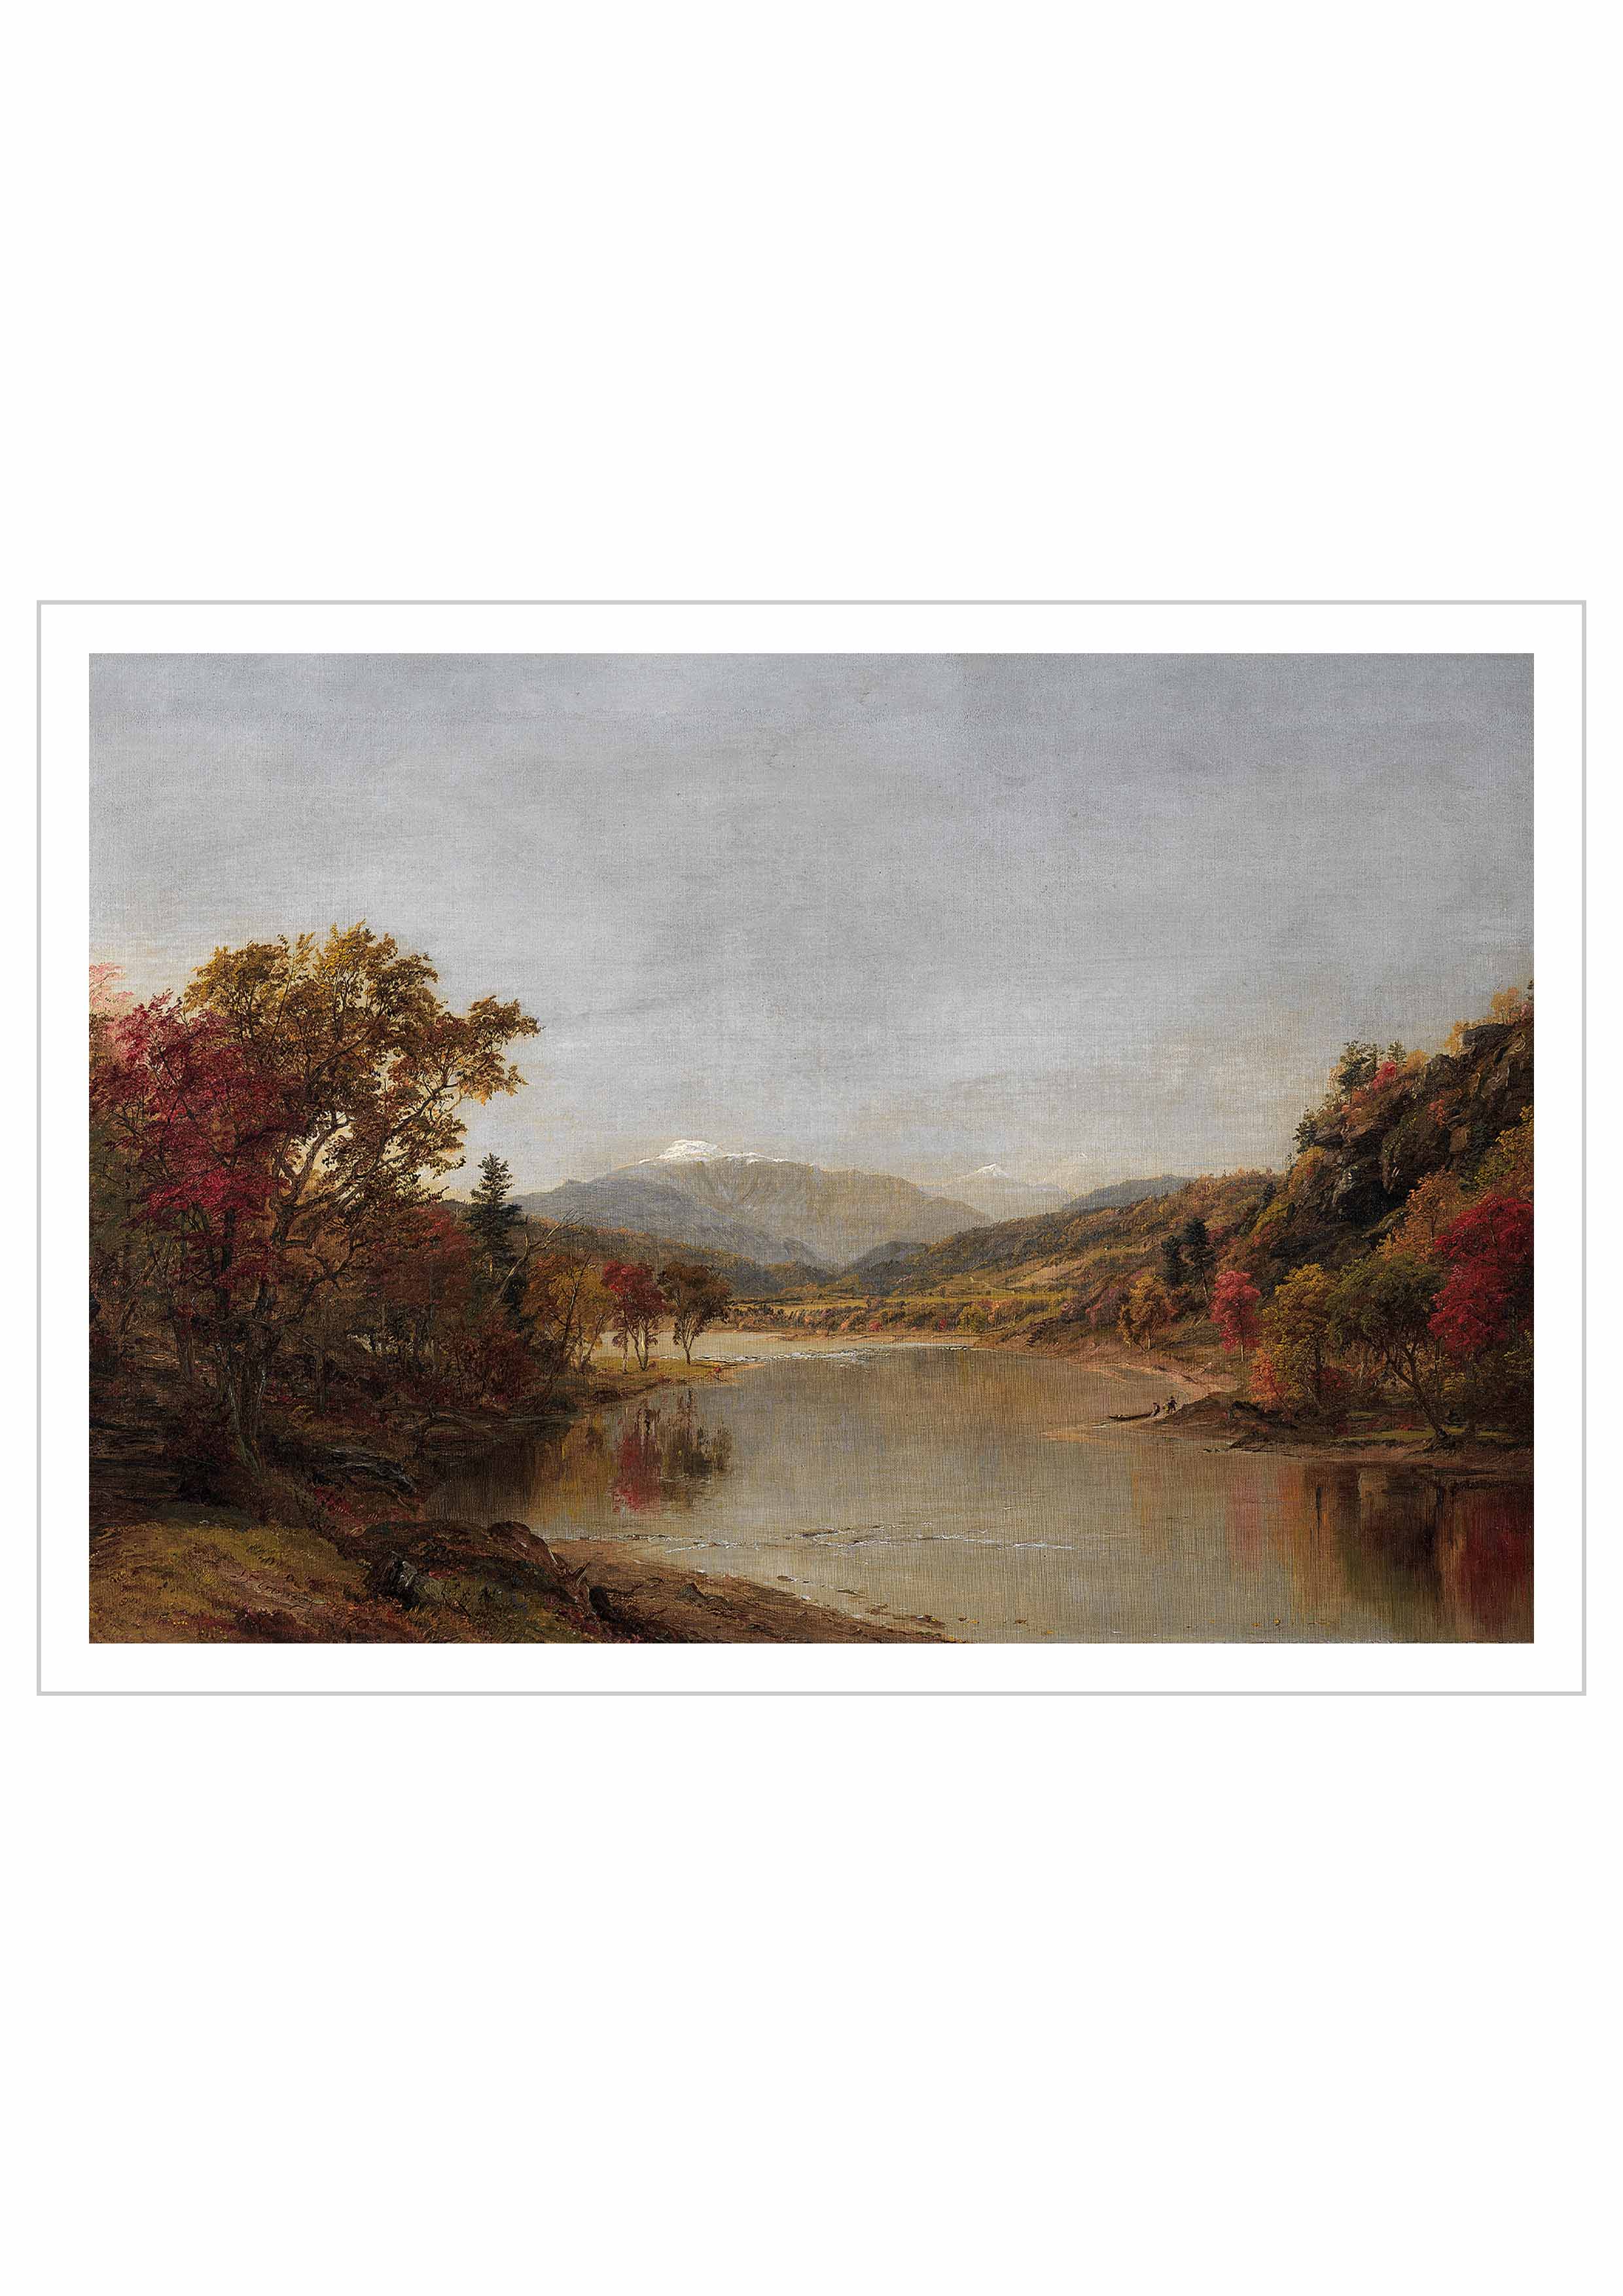 Autumn landscape "Mount Washington, New Hampshire" by American artist Jasper Francis Cropsey